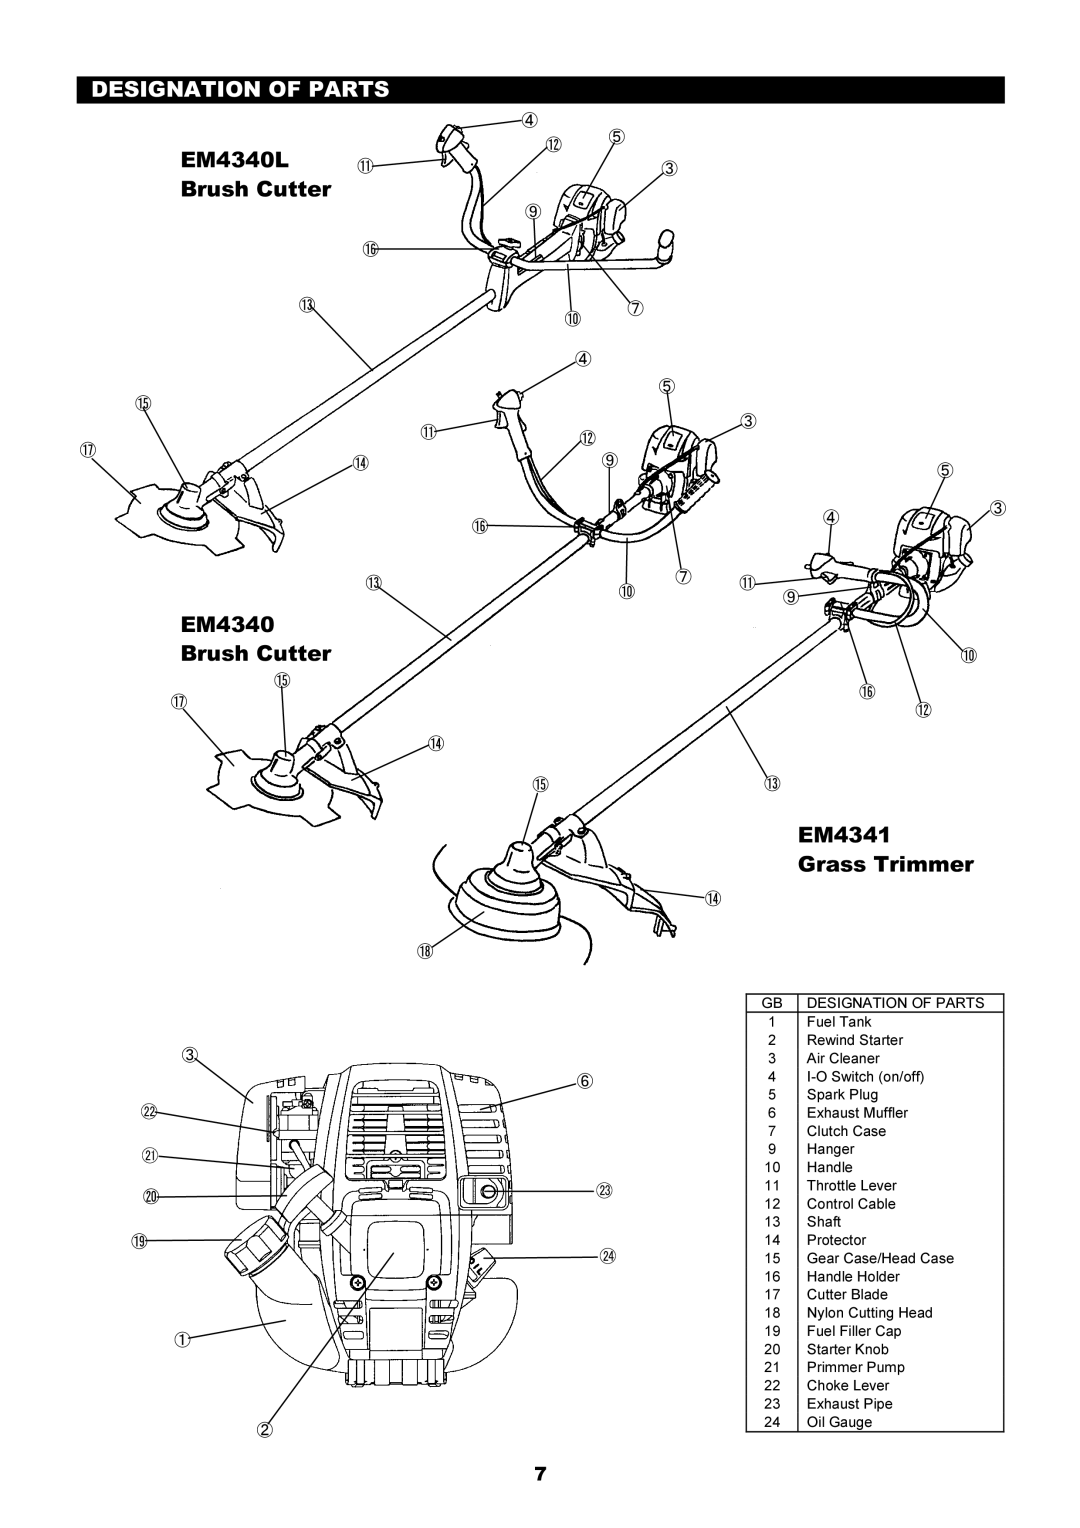 Makita instruction manual Designation Of Parts, EM4340L Brush Cutter, EM4340 Brush Cutter, EM4341 Grass Trimmer 